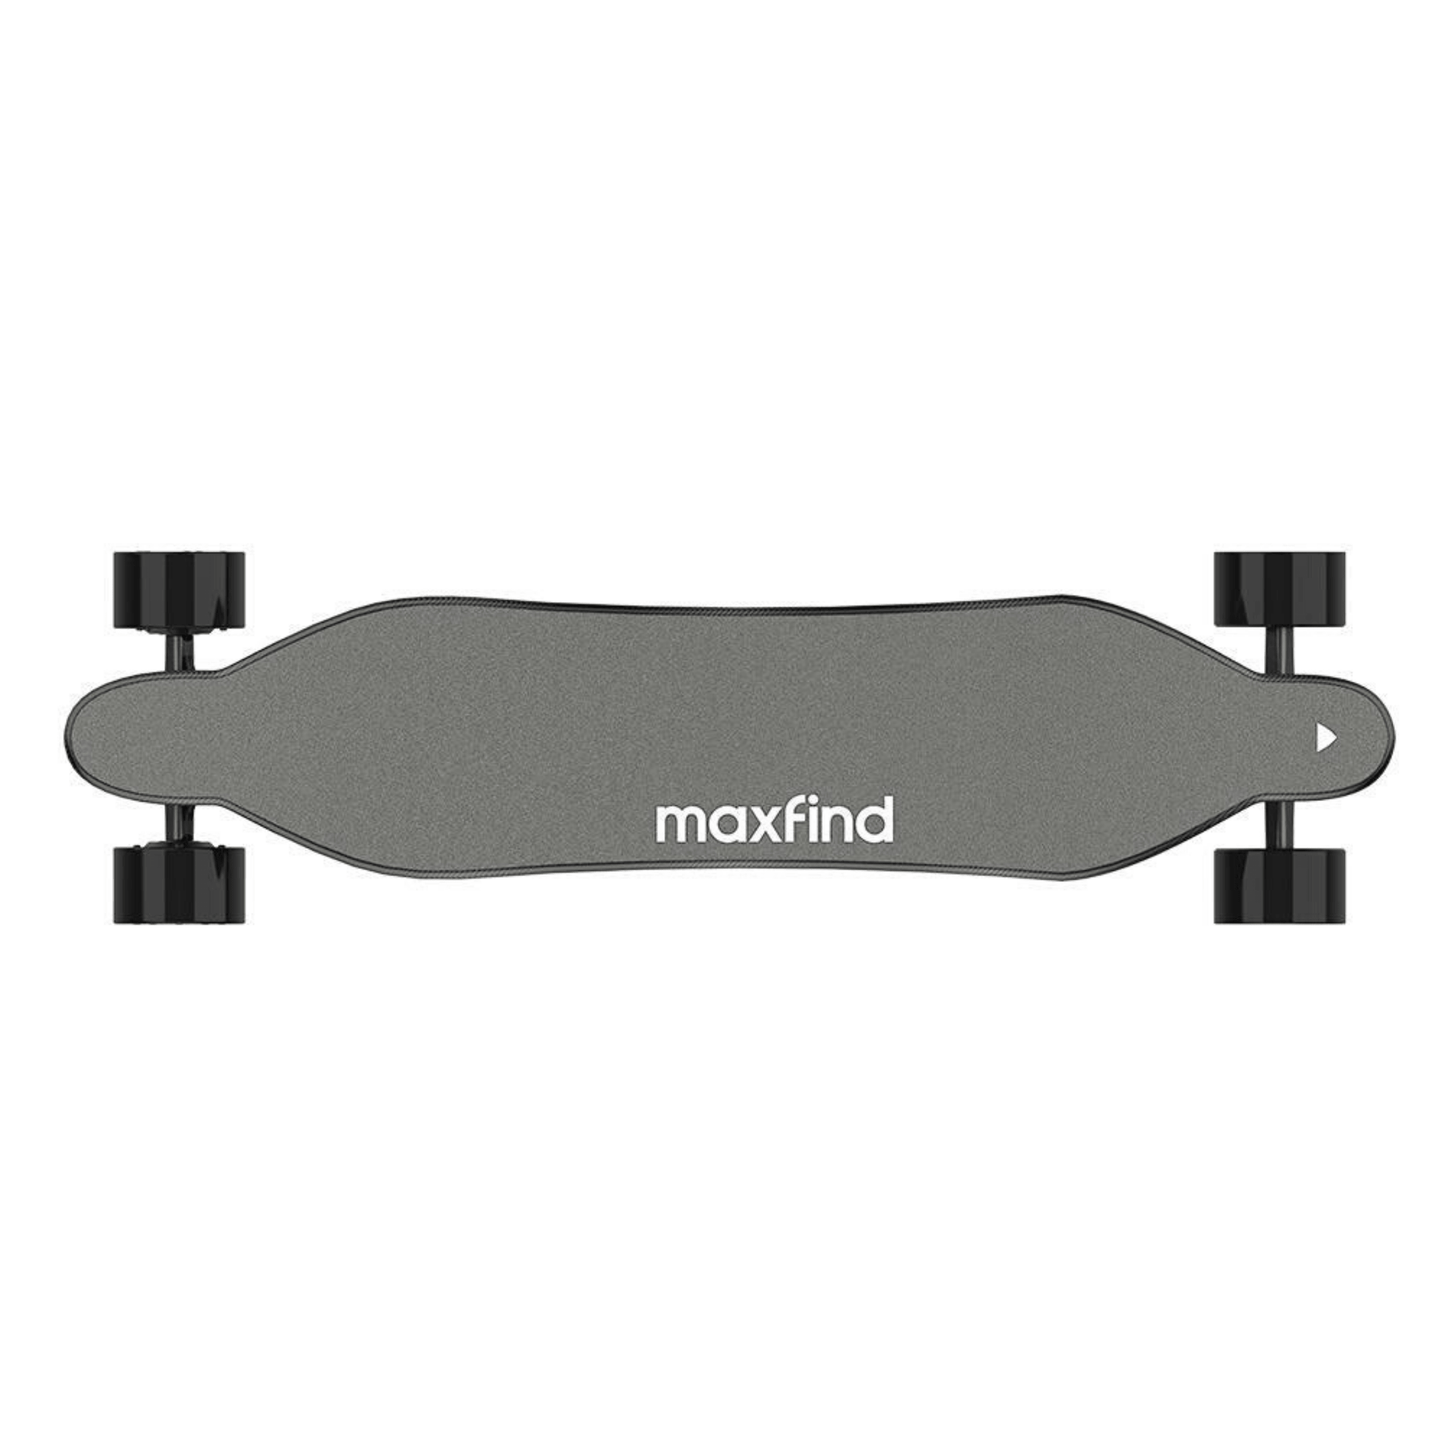 Maxfind Max 4 Pro Electric Longboard